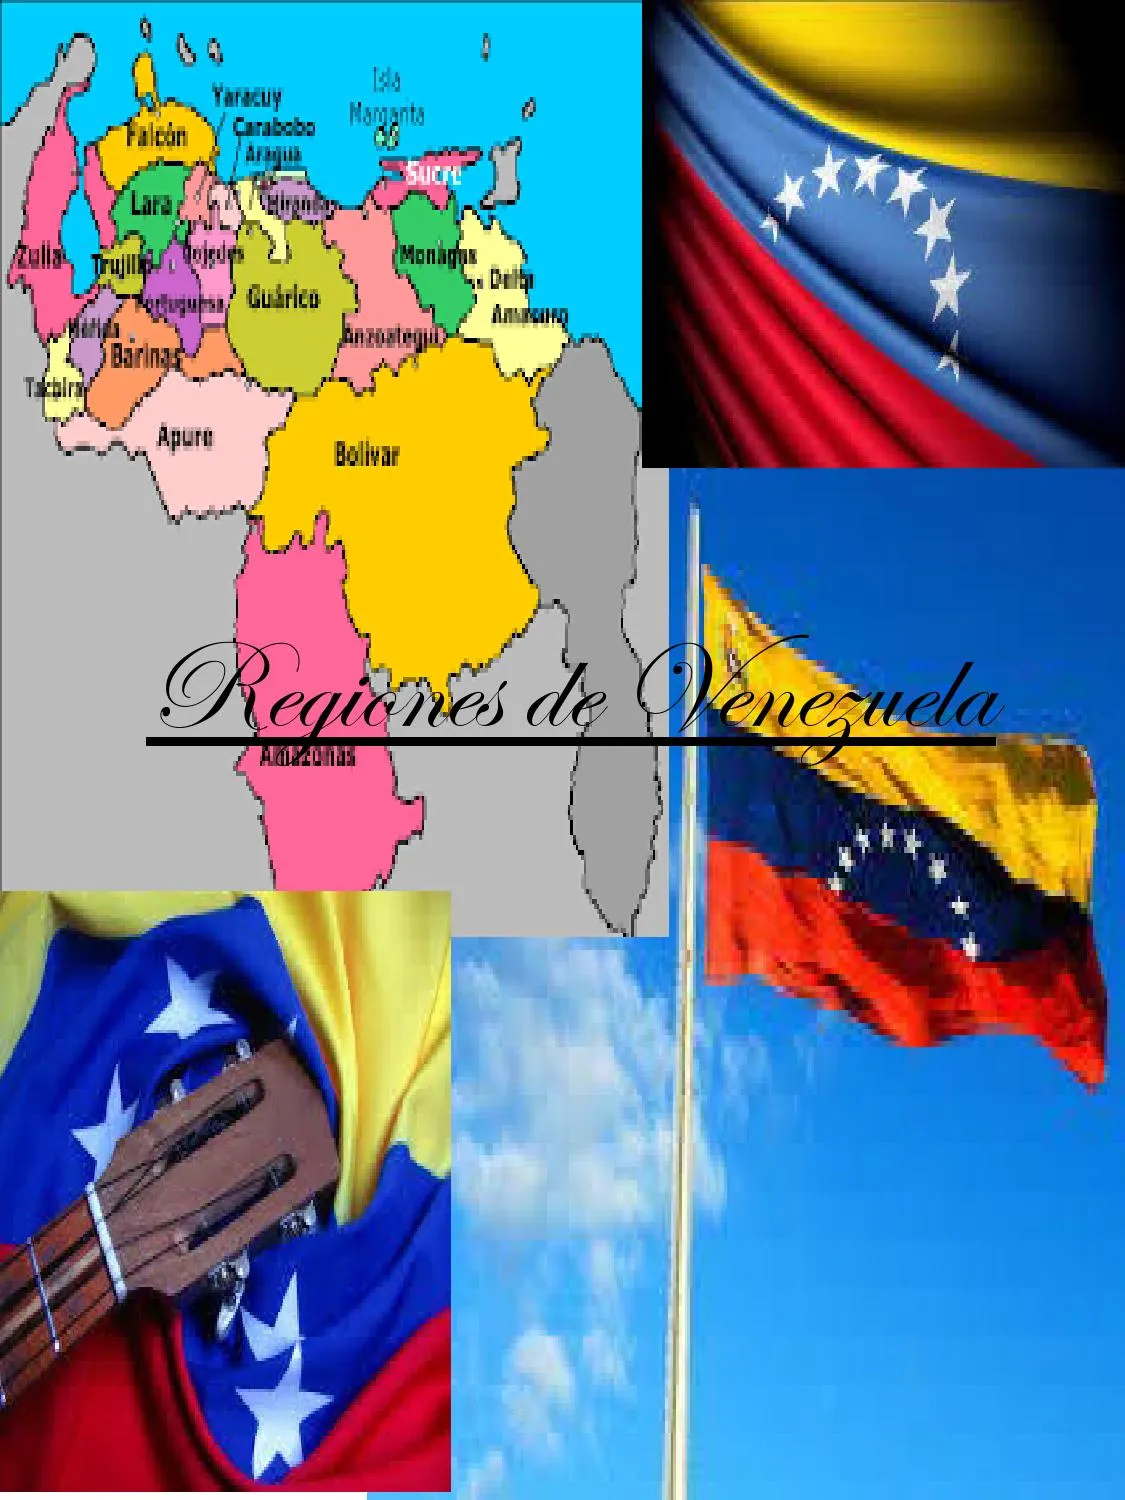 Regiones de venezuela by Rutliscano - Issuu